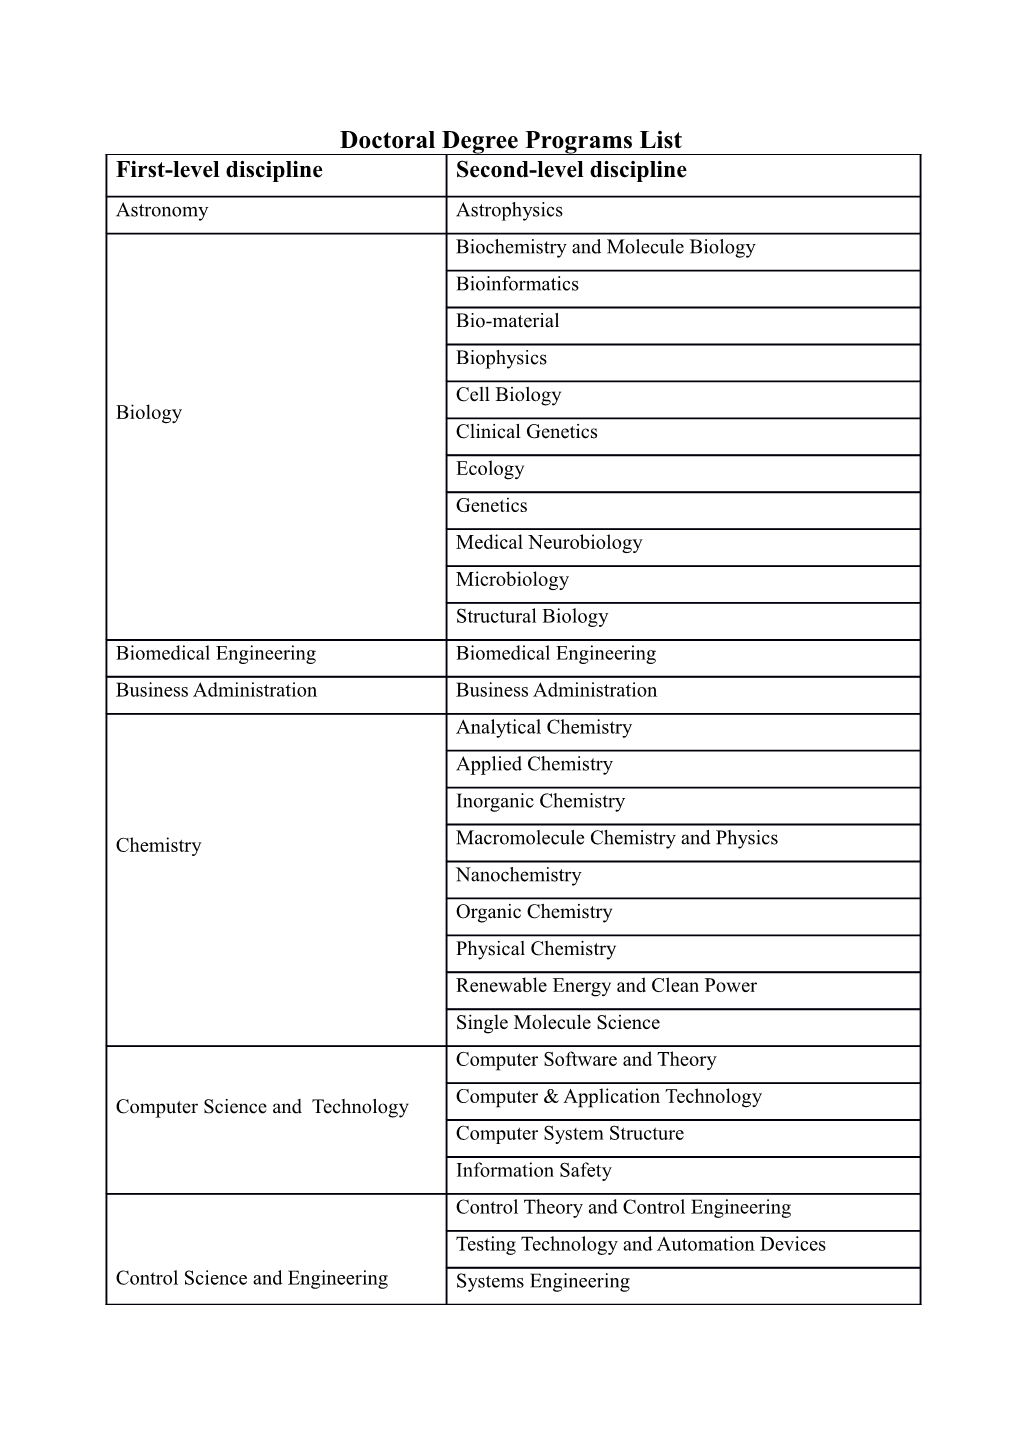 Doctoral Degree Programs List